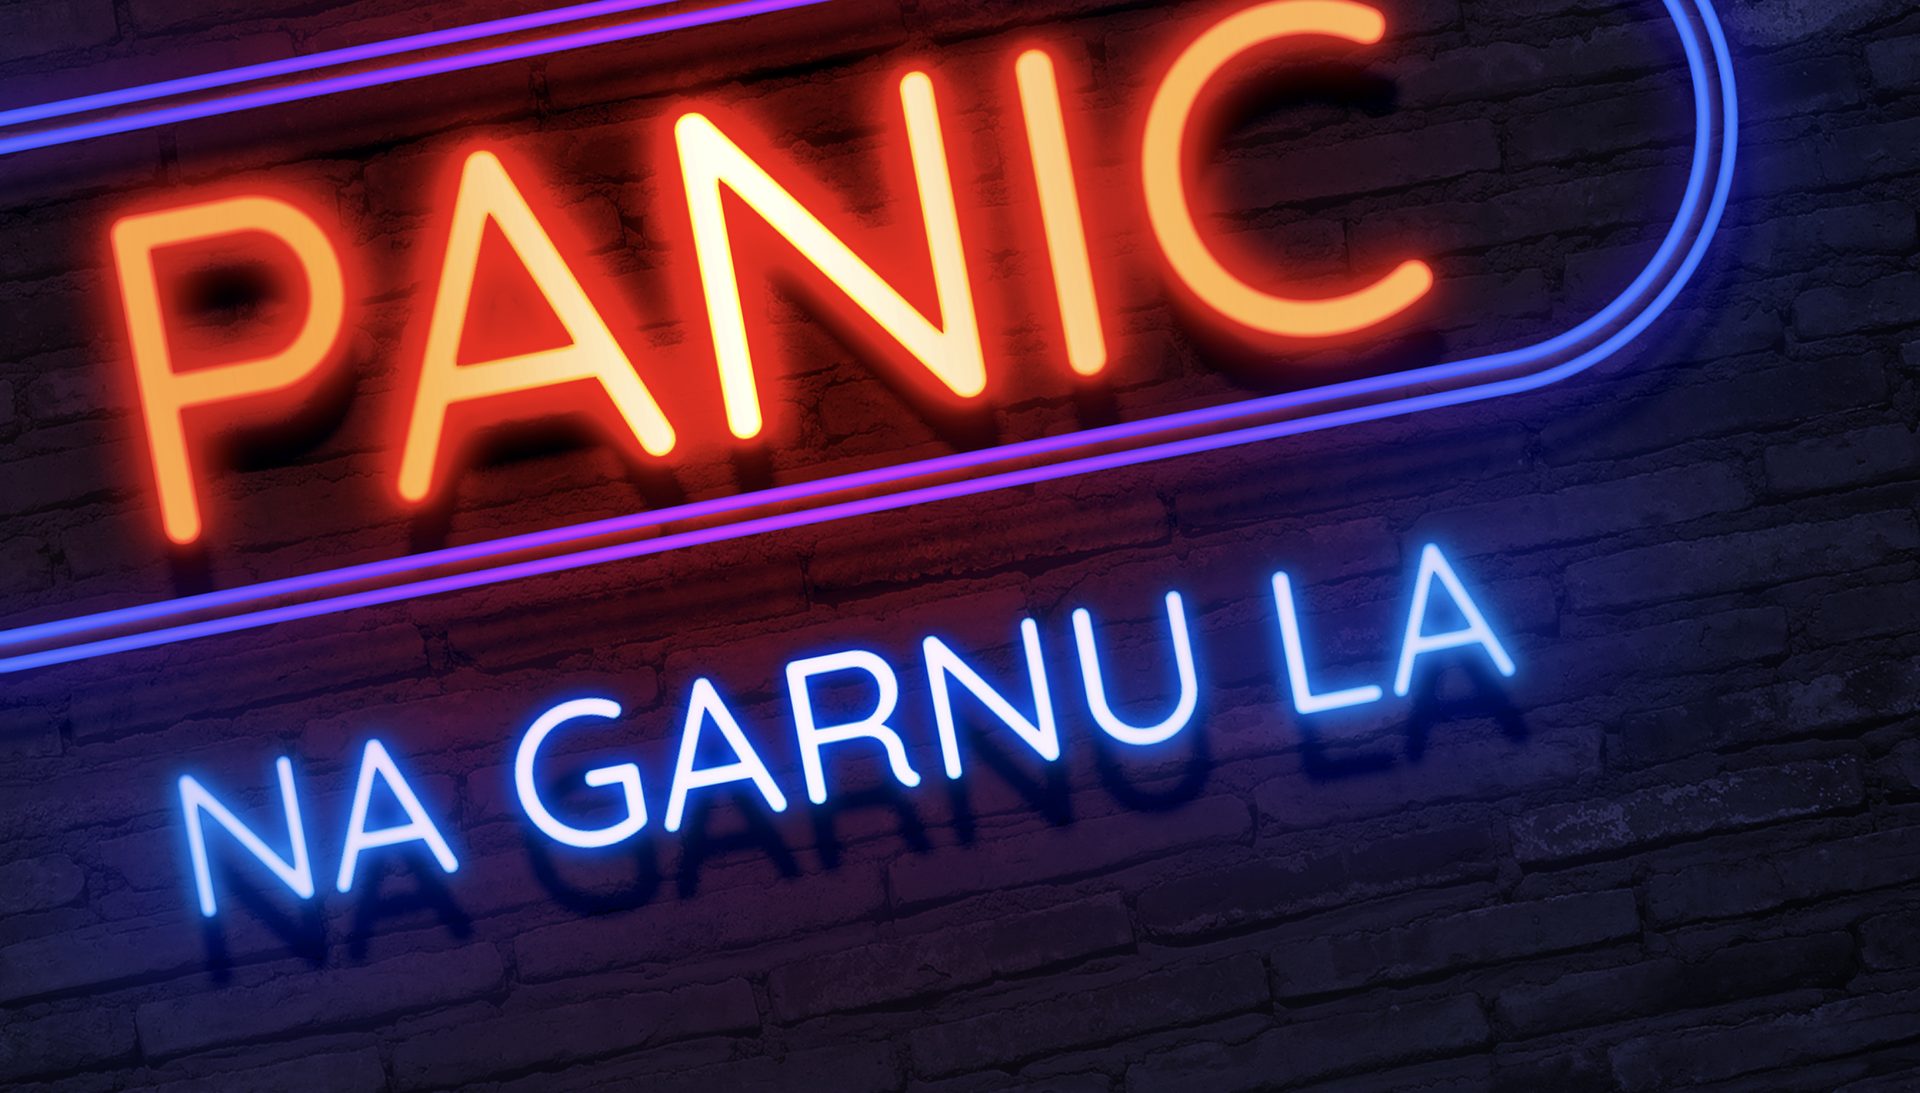 A neon sign that says "Panic Na Garnu La"